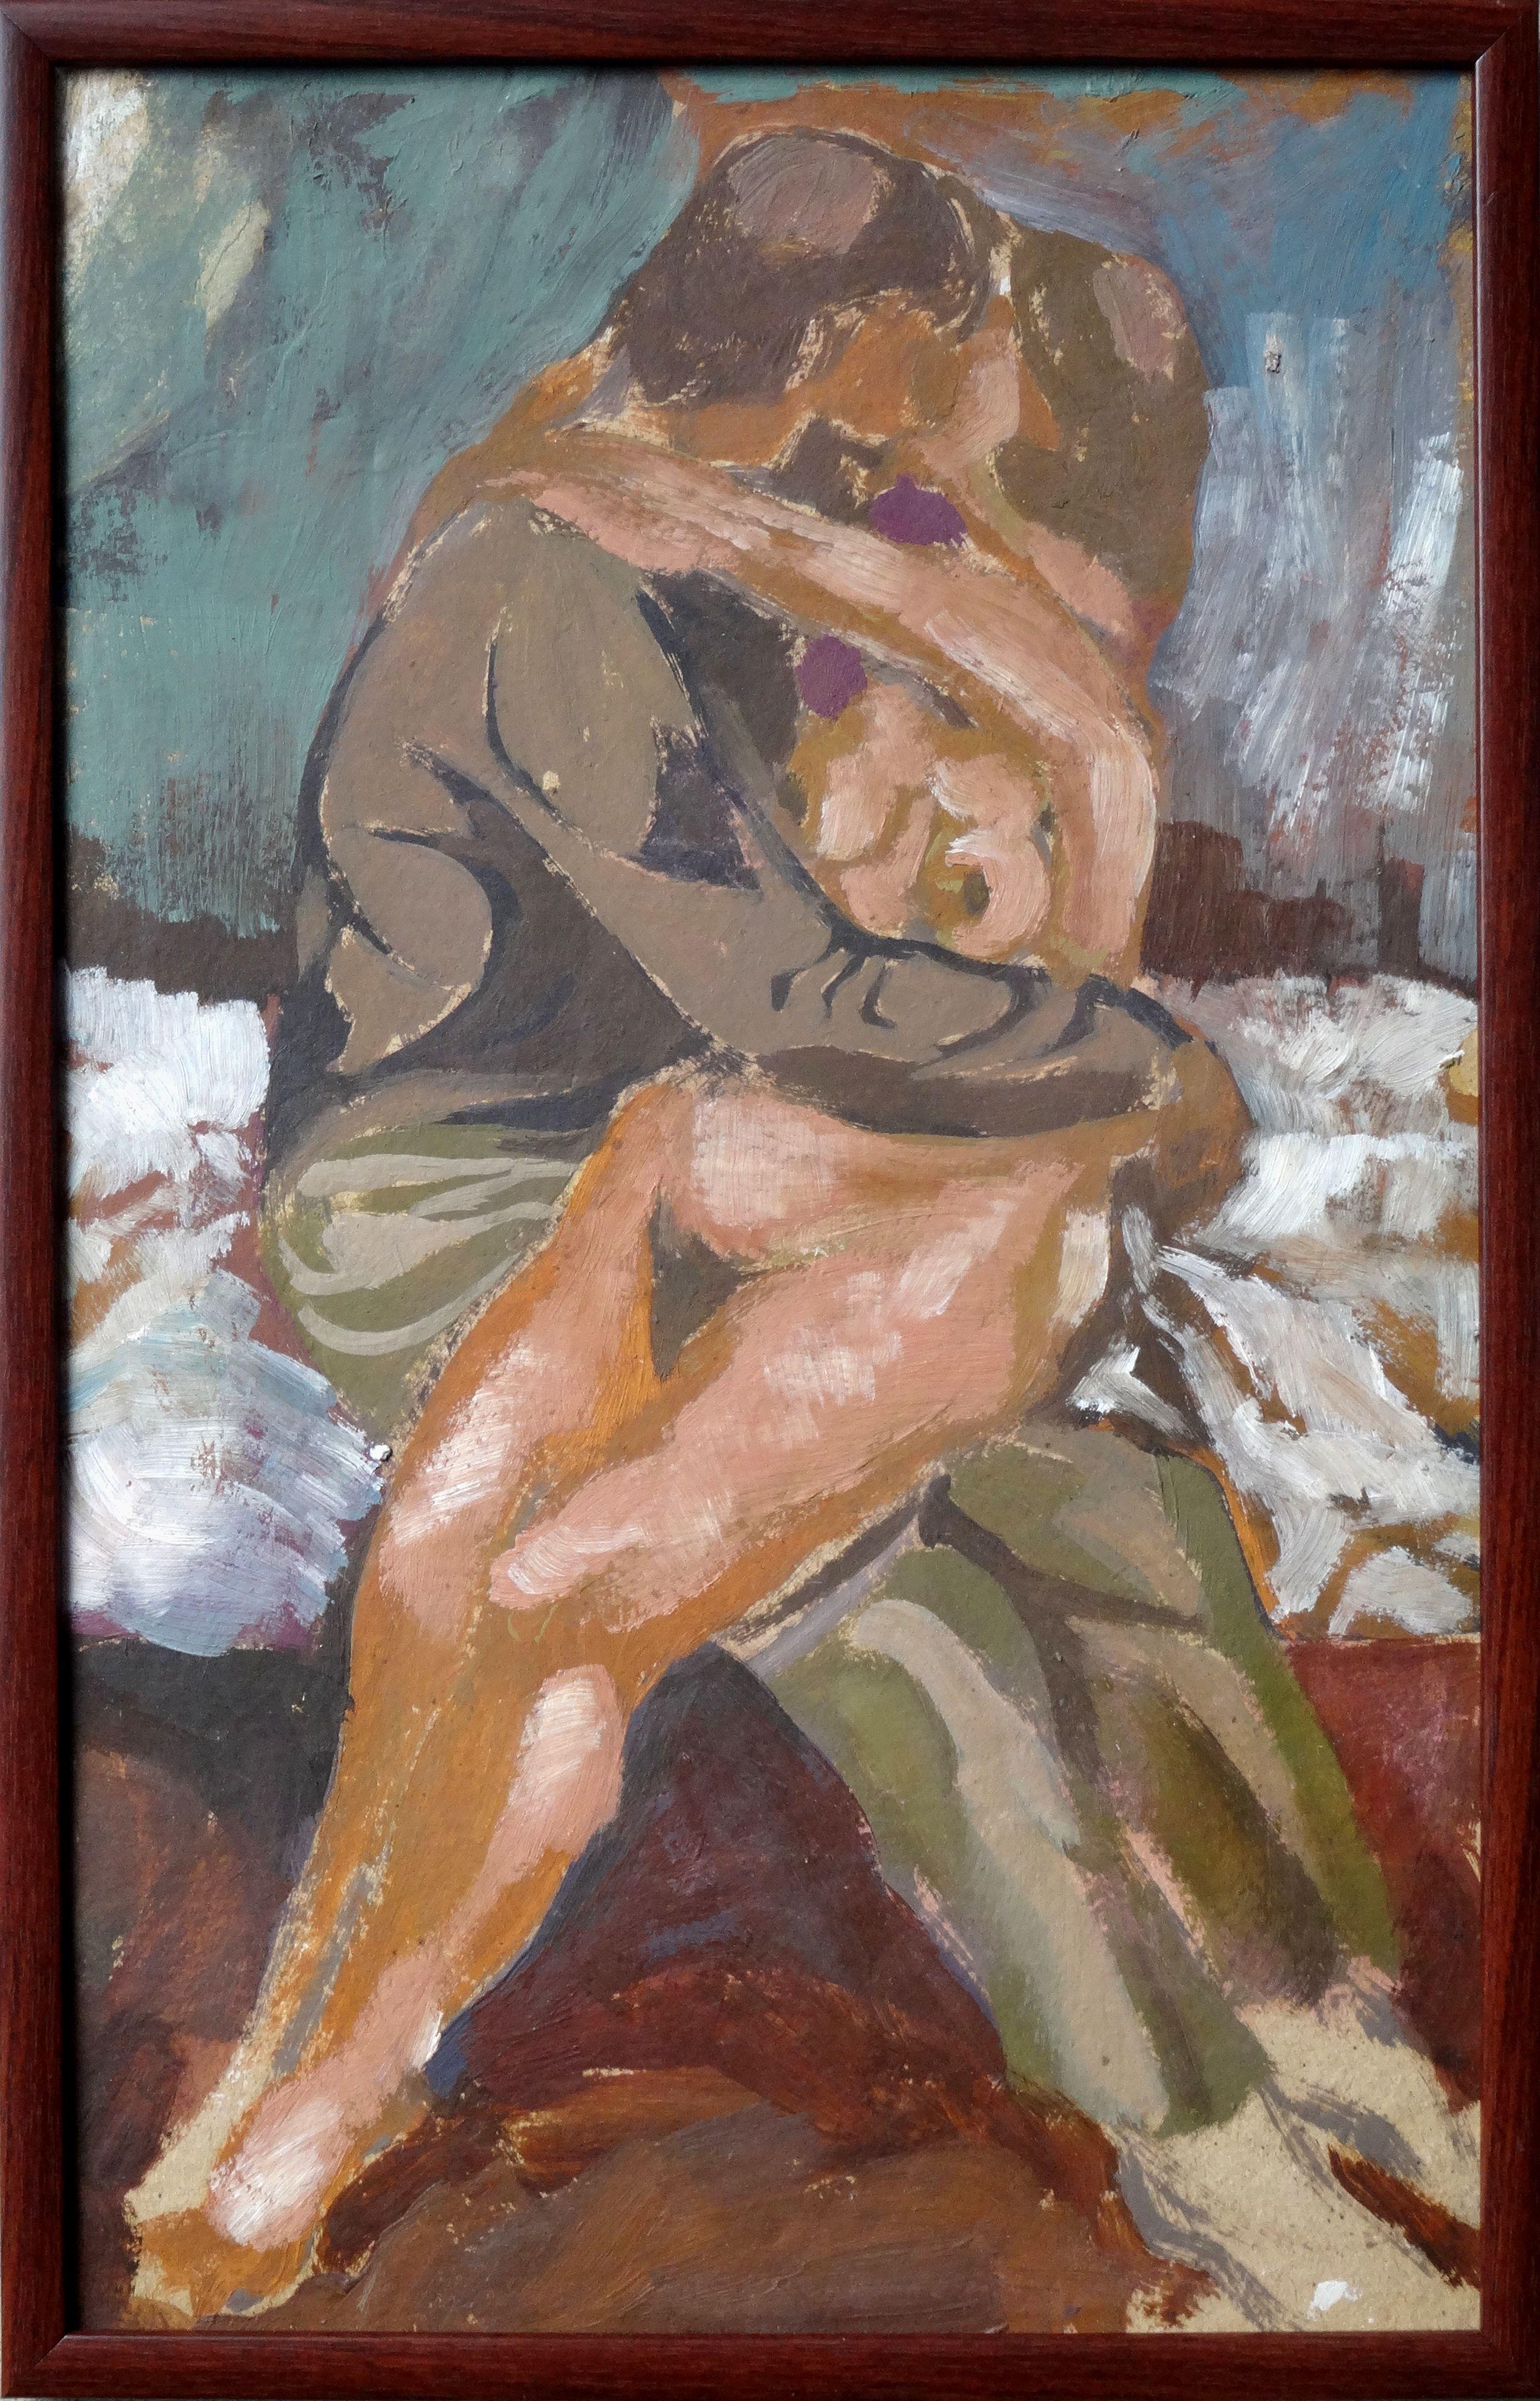 Lovers. Cardboard, oil, 44x28 cm + gift book - Painting by Vladimir Glushenkov 